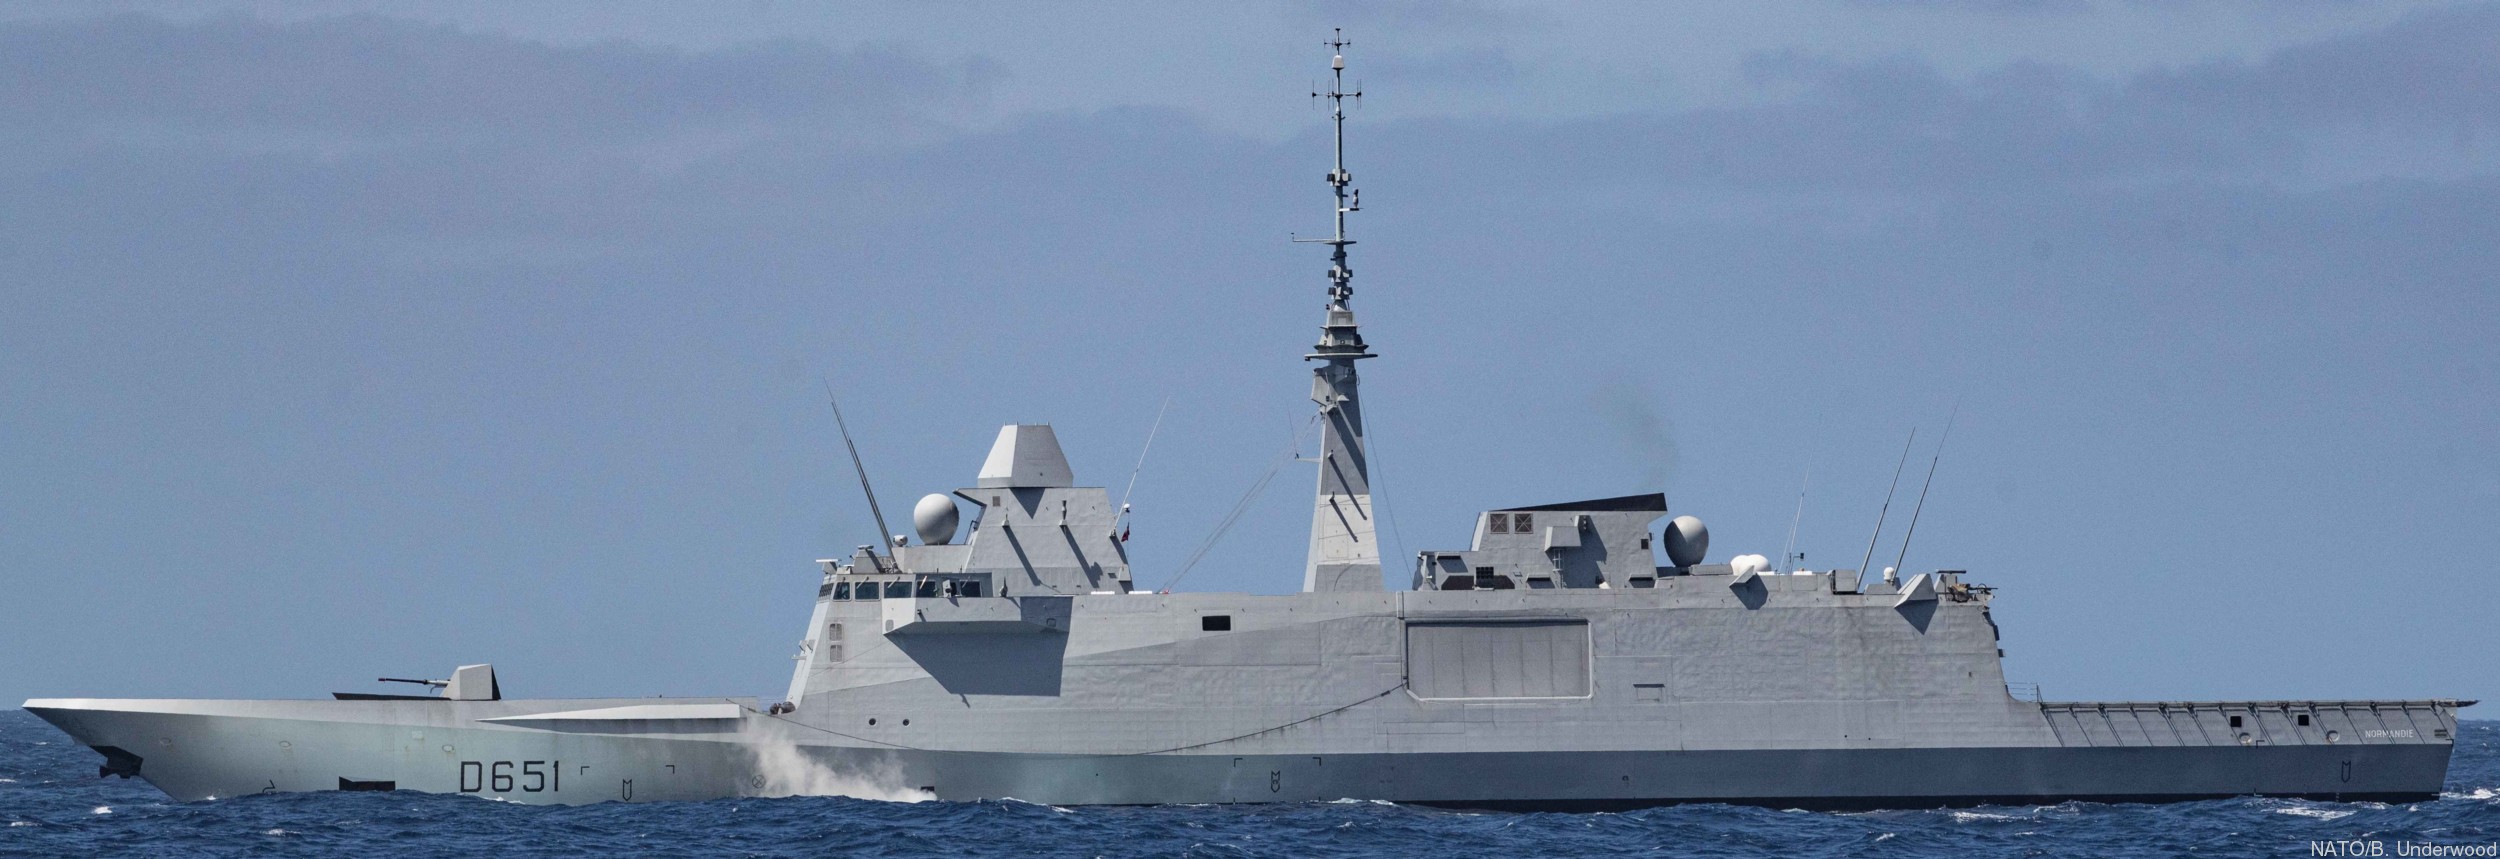 d-651 fs normandie fremm aquitaine class frigate fregate multi purpose french navy marine nationale 12